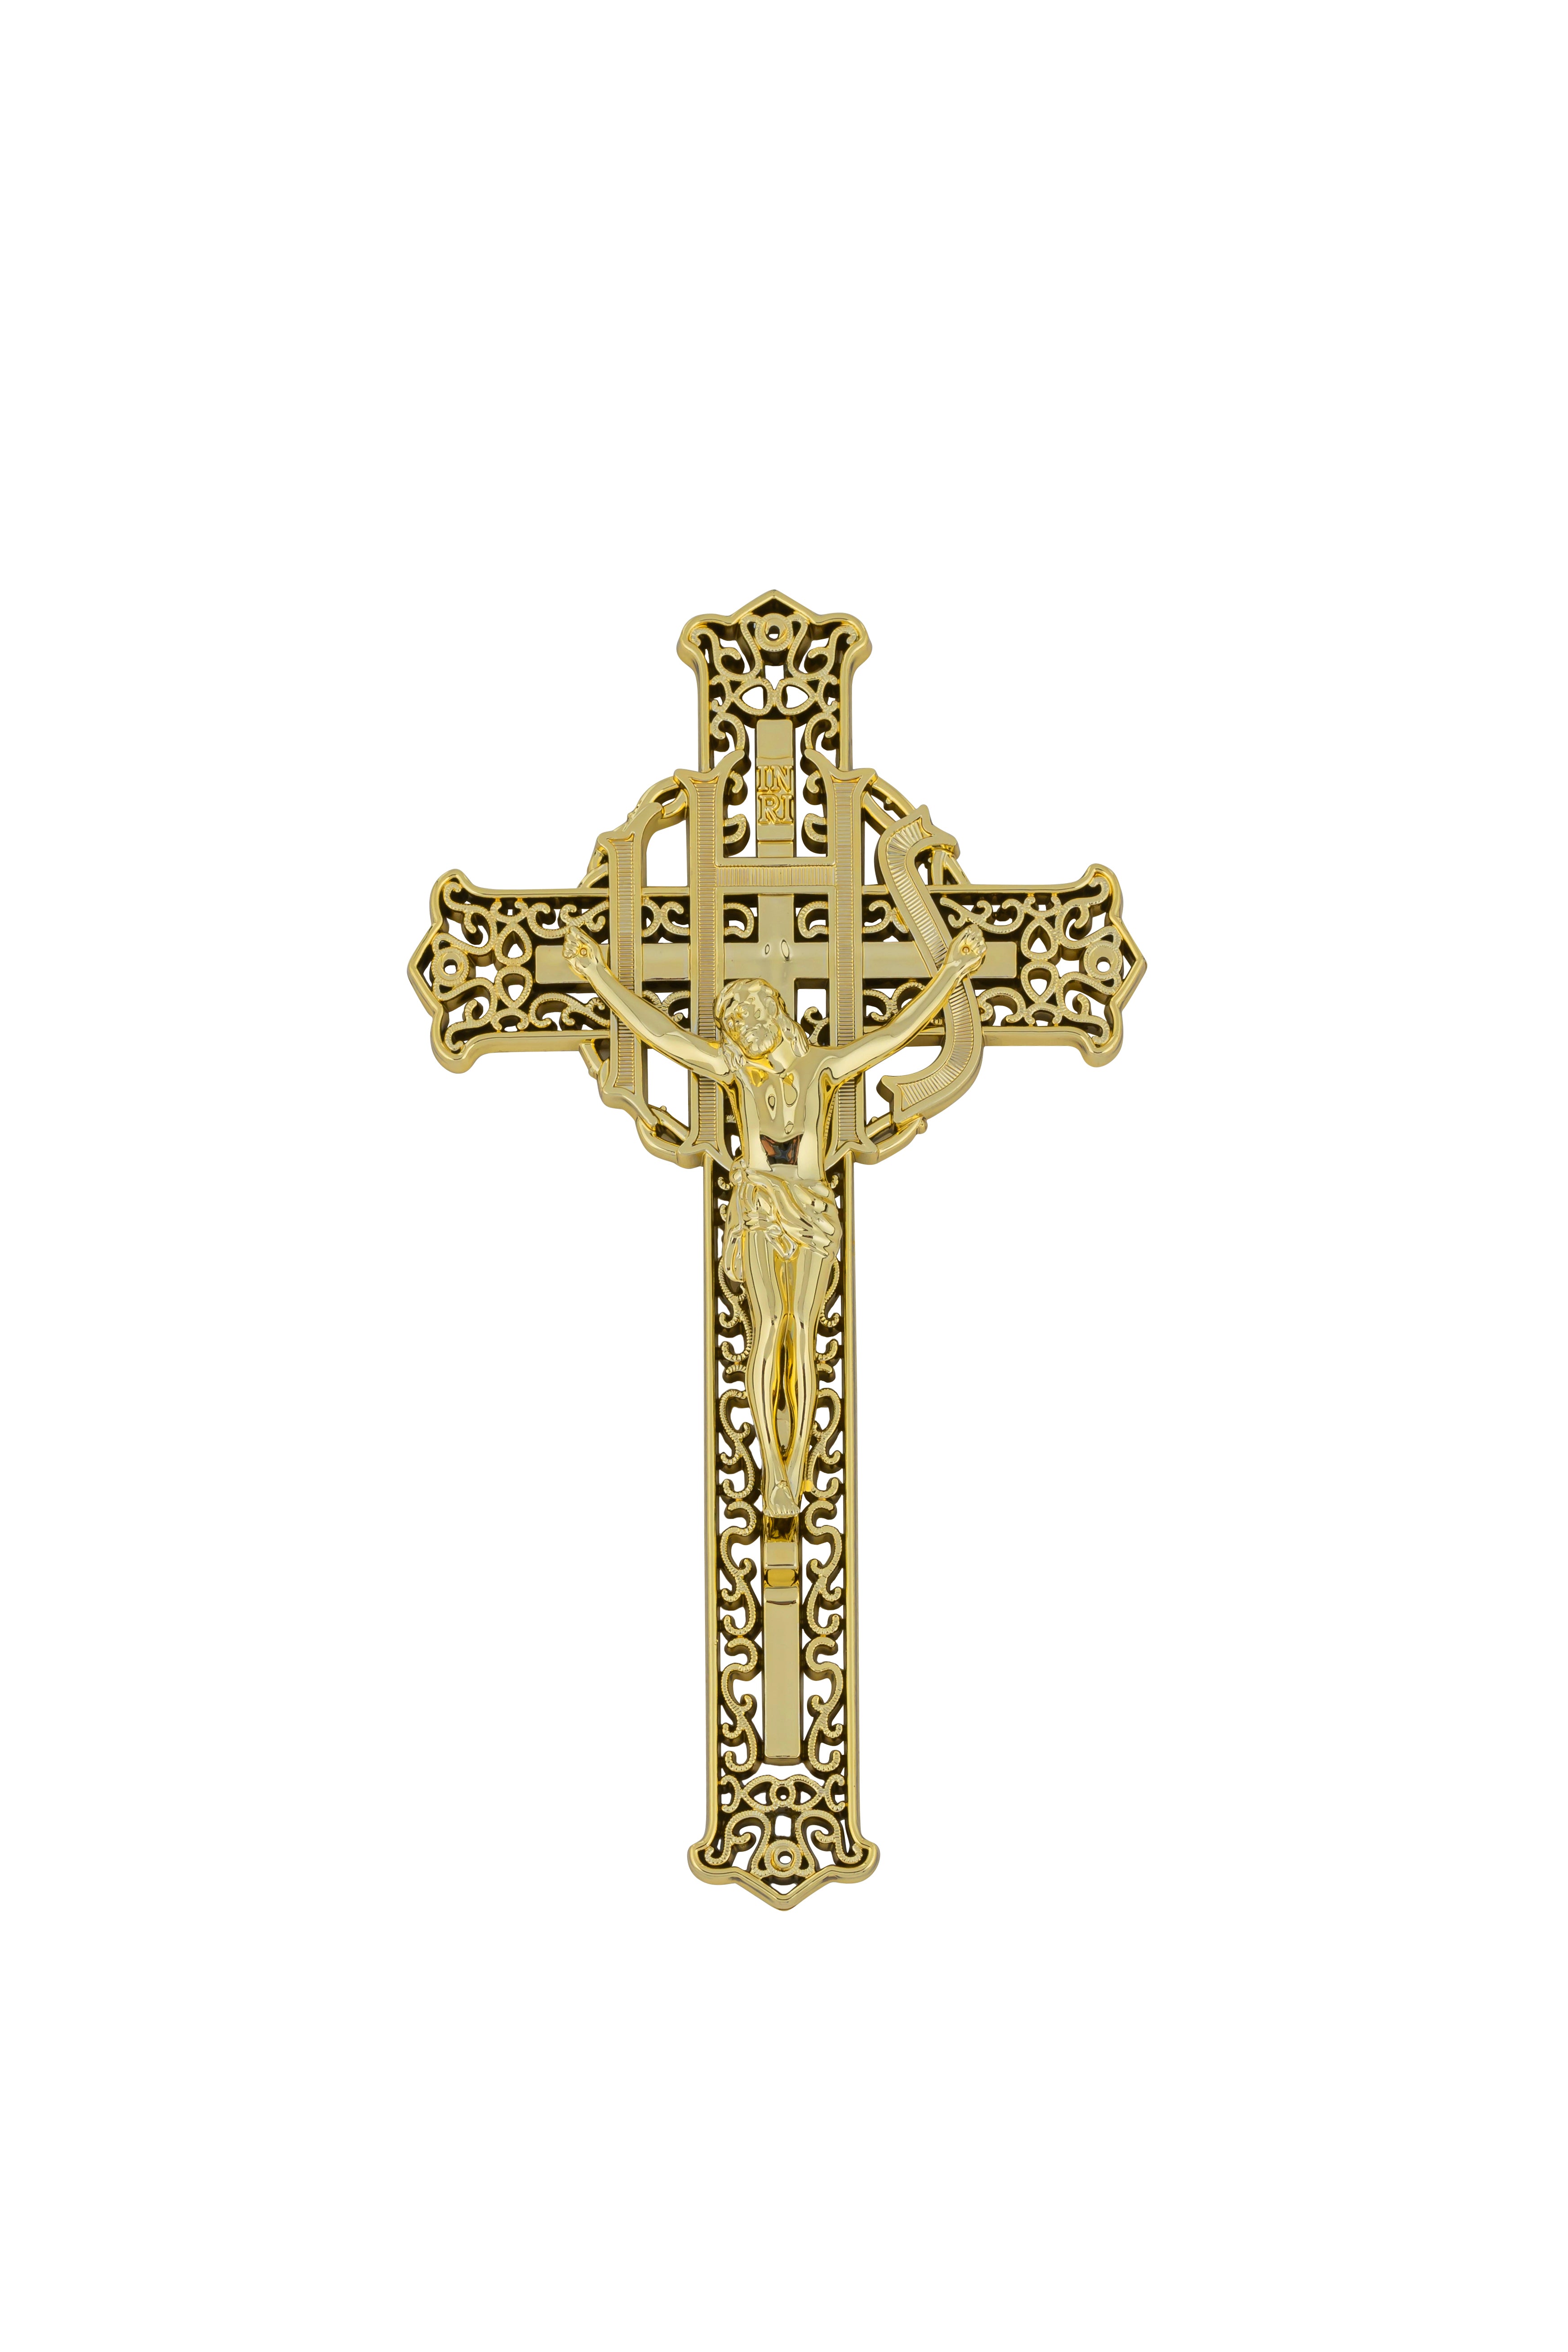 8 inch Plastic Filagree Crucifix Gold